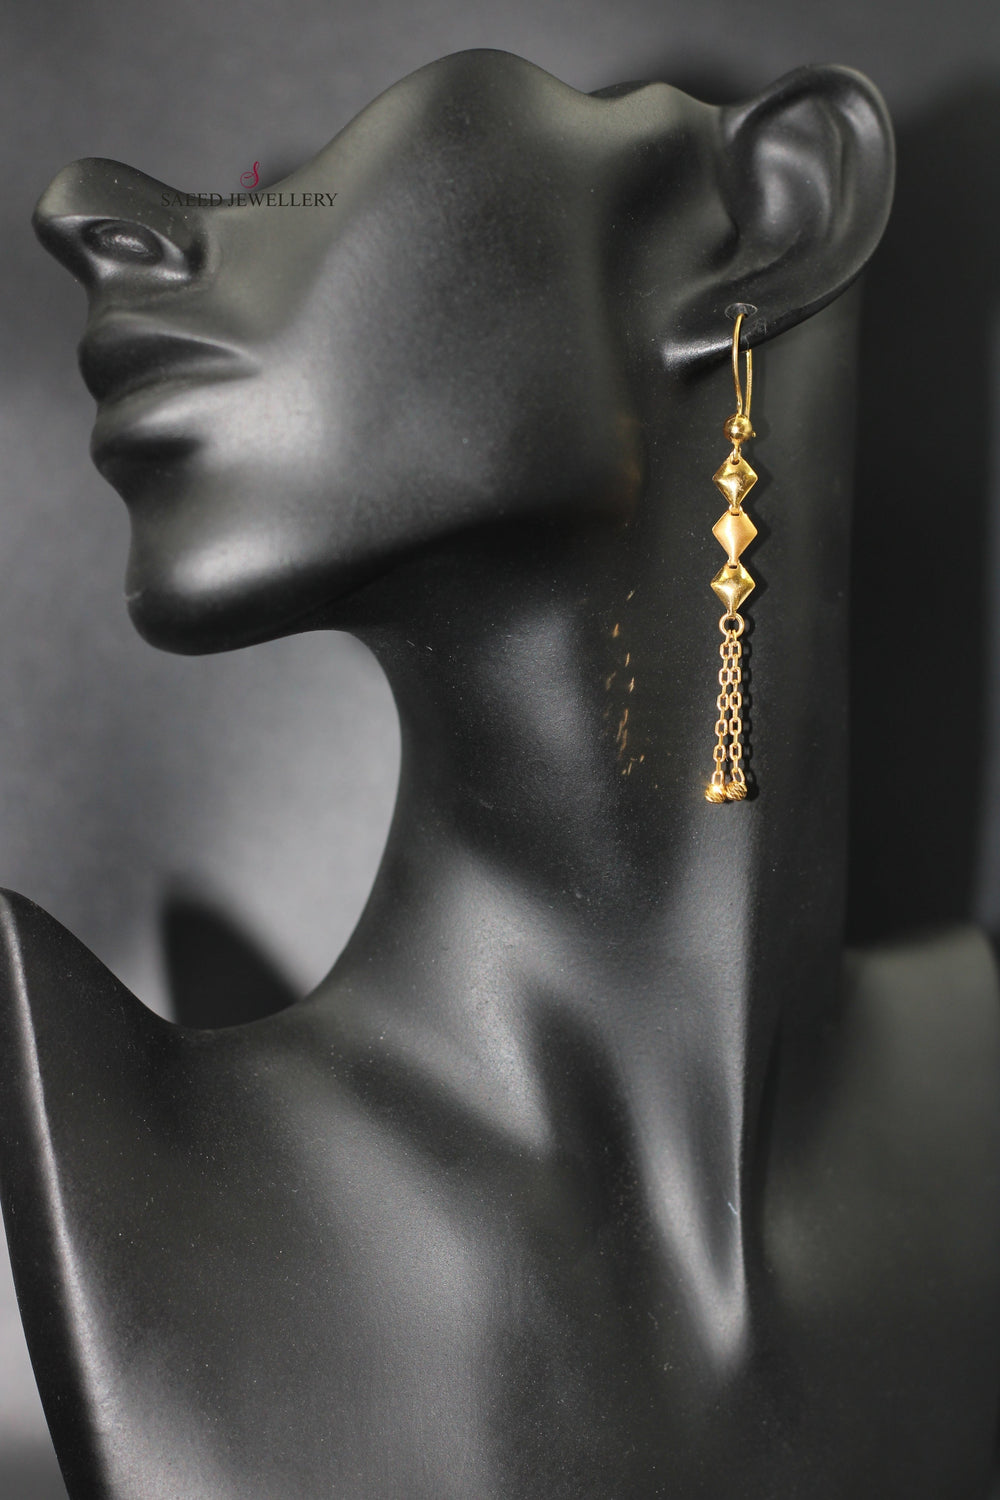 21K Gold Fancy Earrings by Saeed Jewelry - Image 2